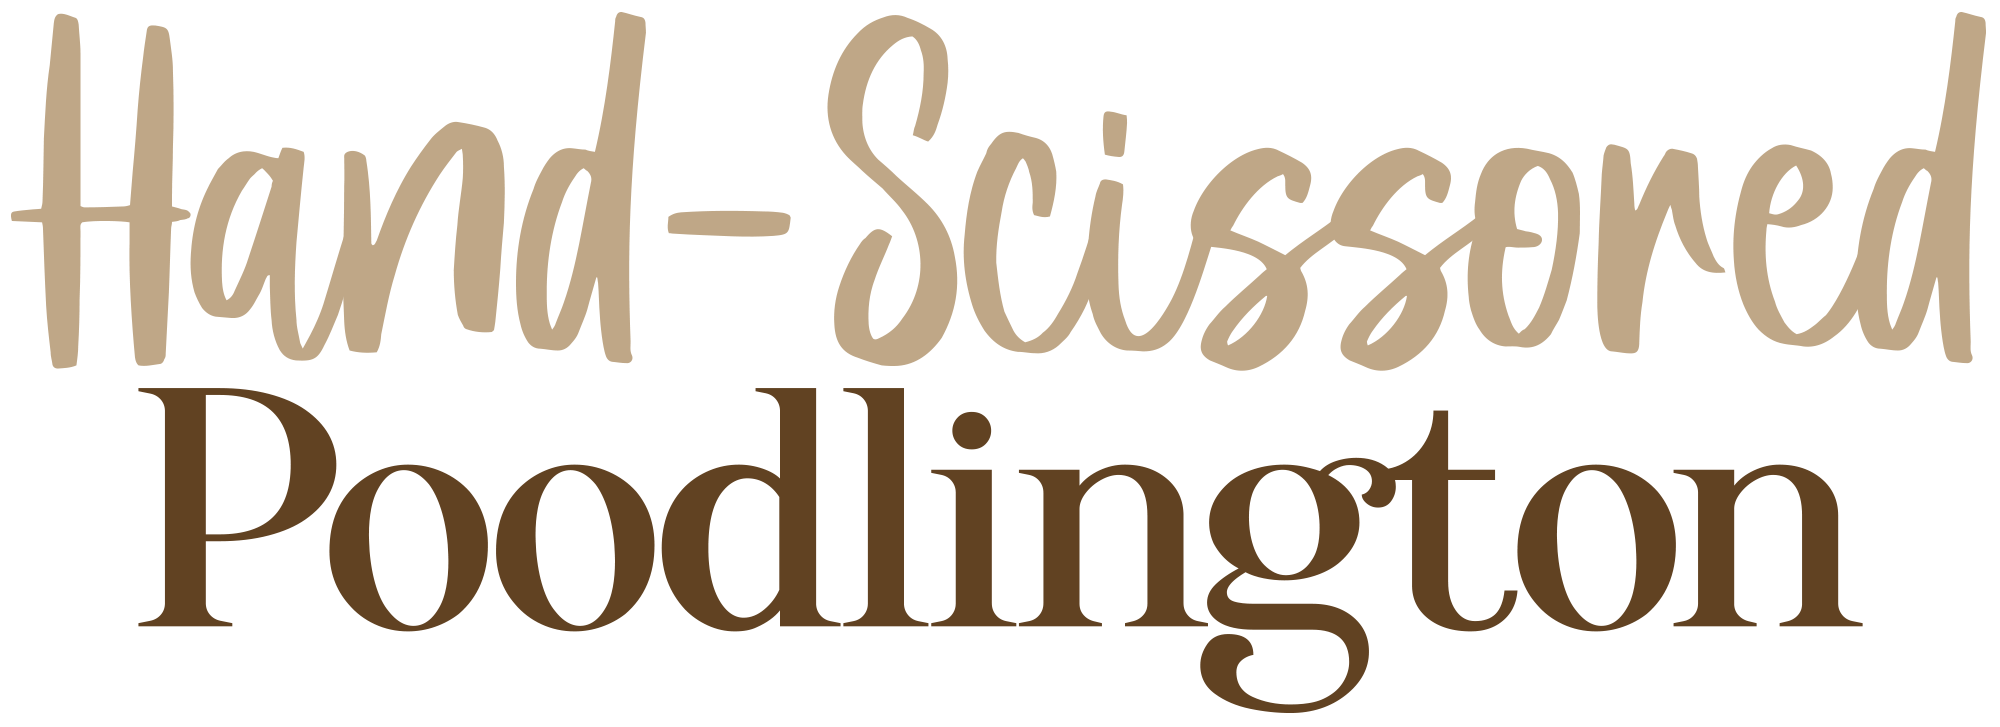 "Hand Scissored Poodlington" typographic title in light/dark brown